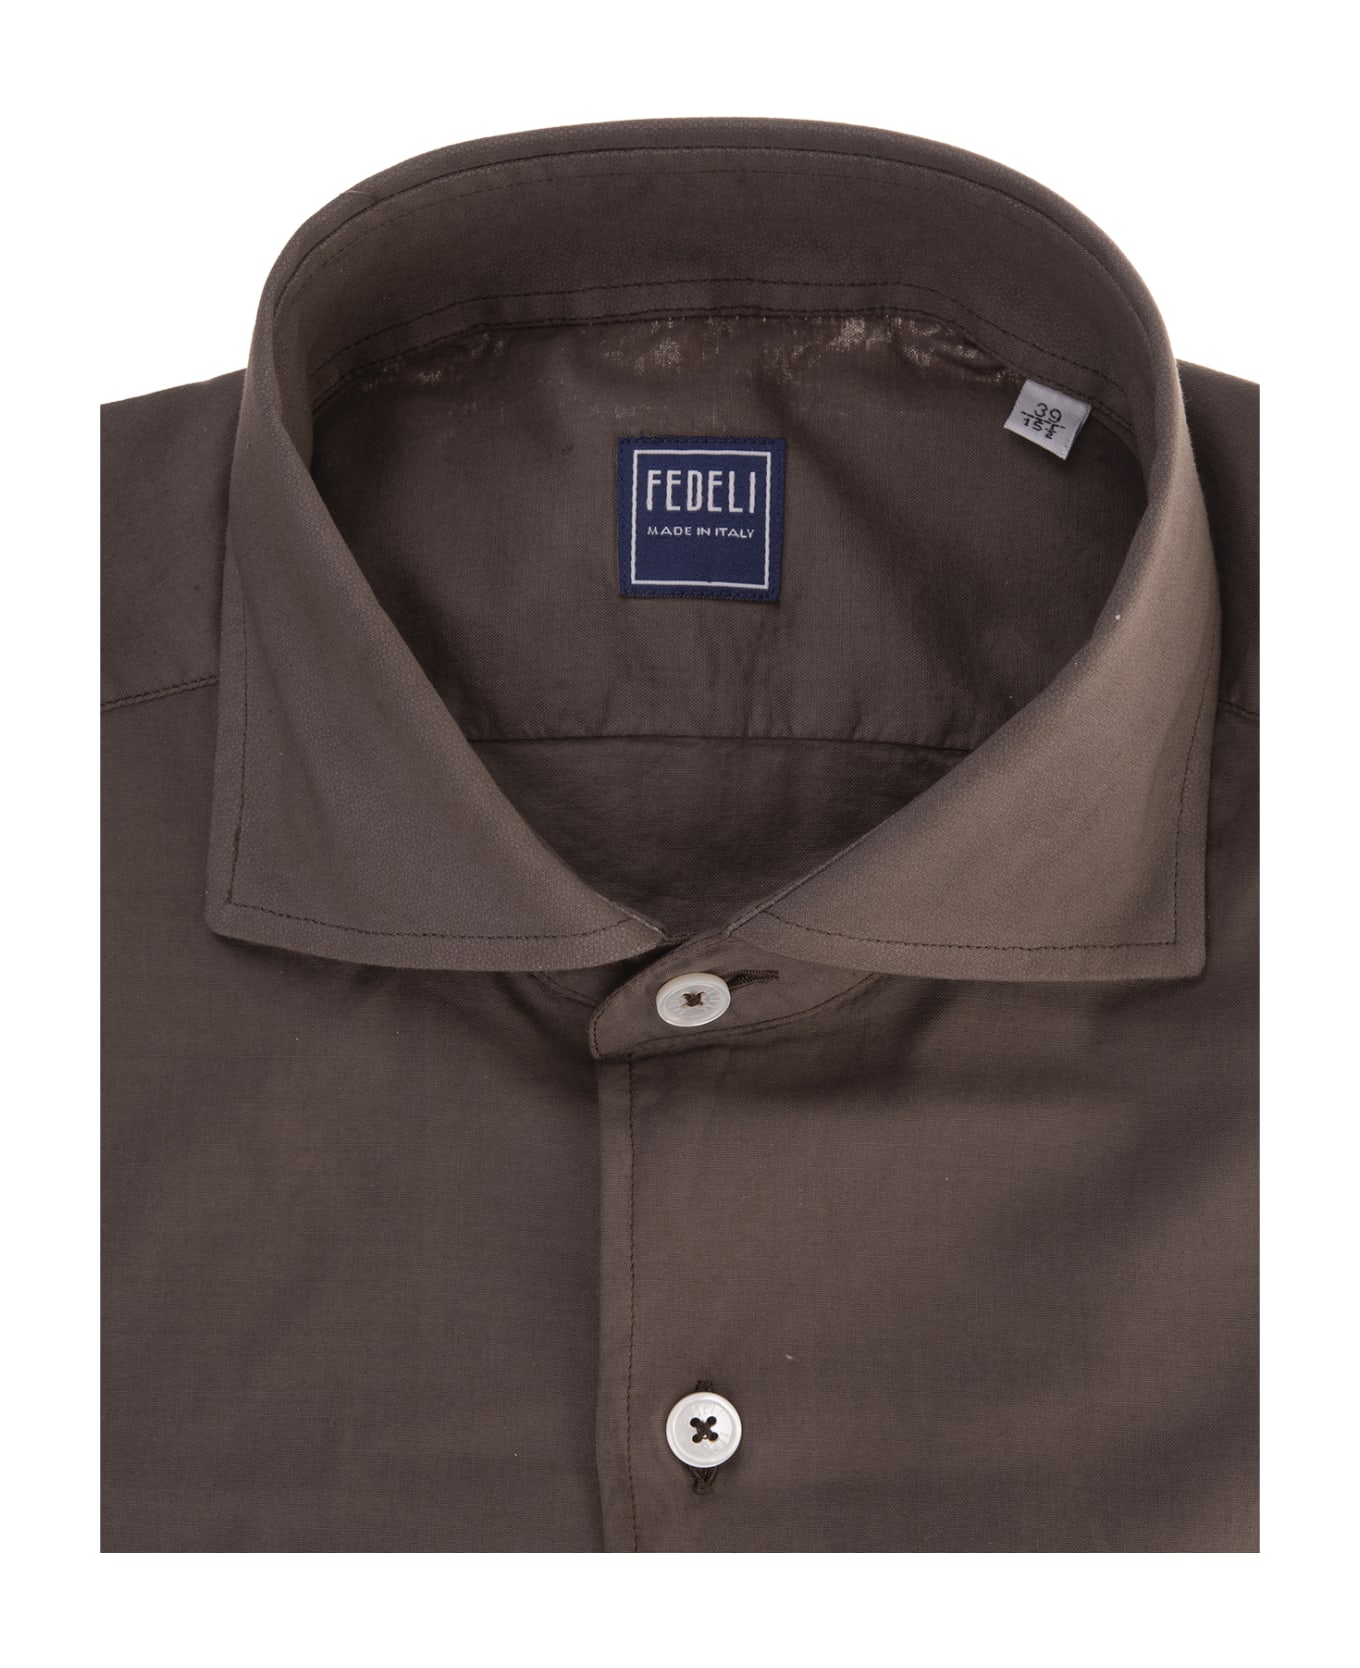 Fedeli Brown Poplin Classic Shirt - Brown